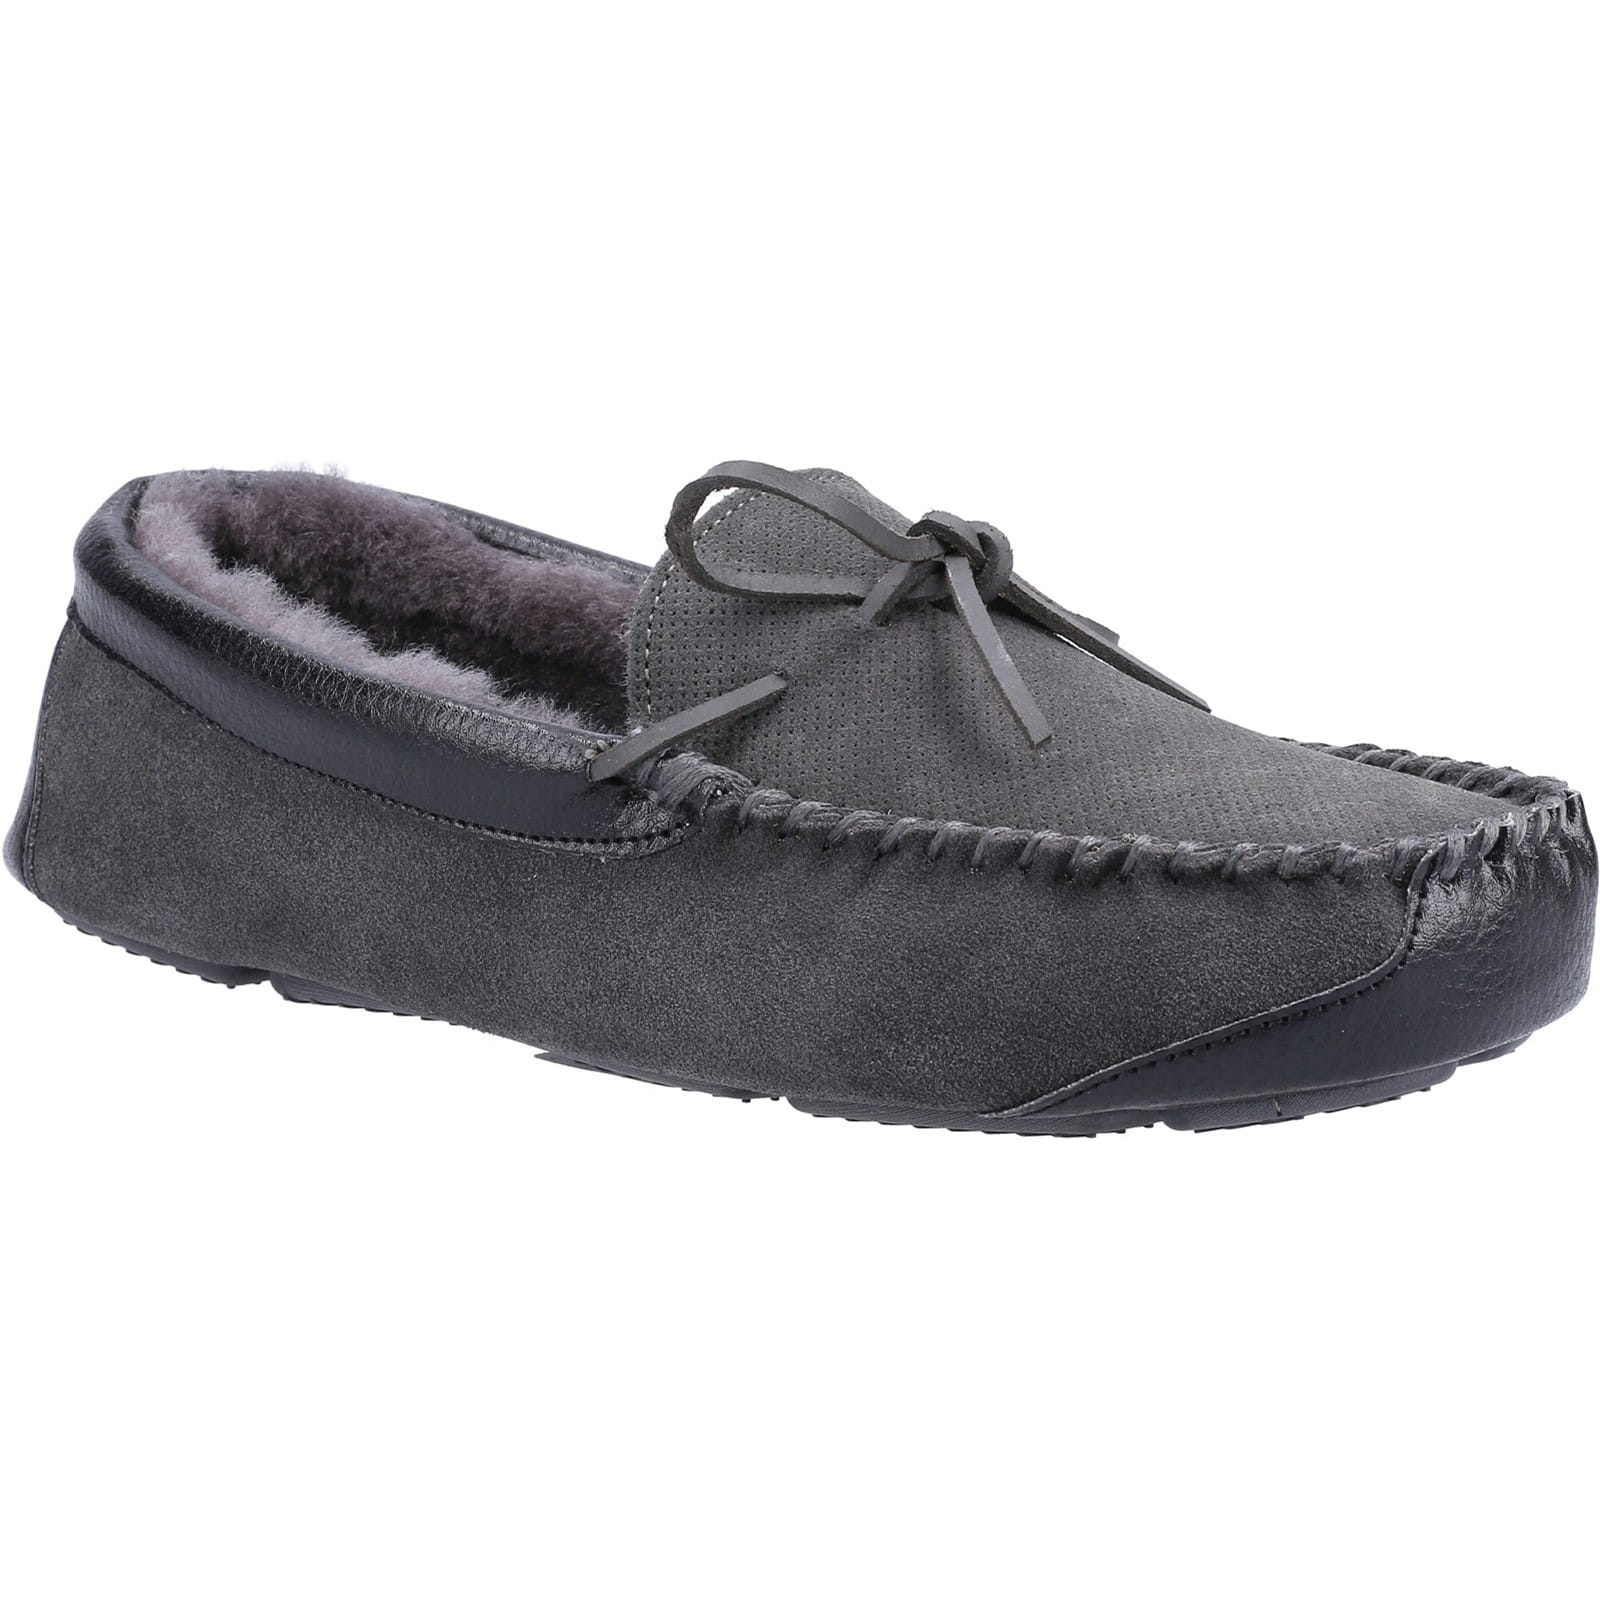 Cotswold Men's Northwood Slip On Sheepskin Moccasin Slippers Shoes - UK 11